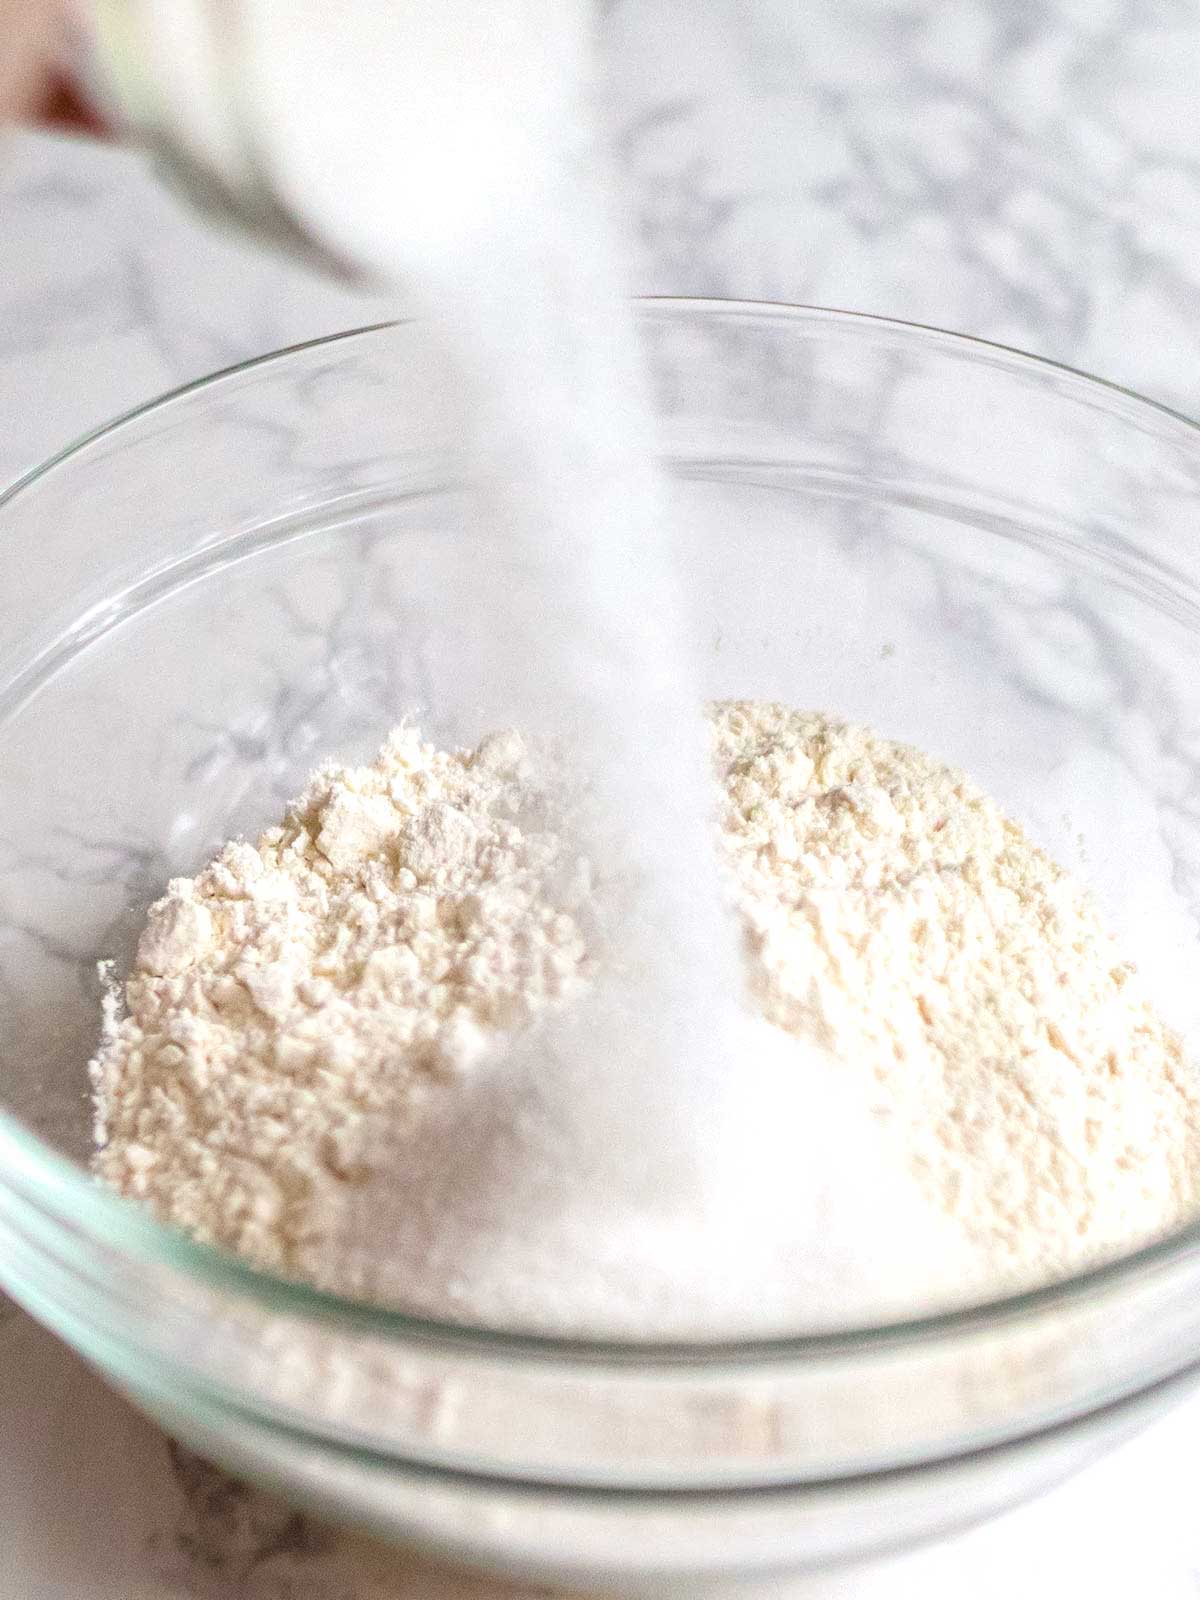 Adding sugar to flour in a bowl.